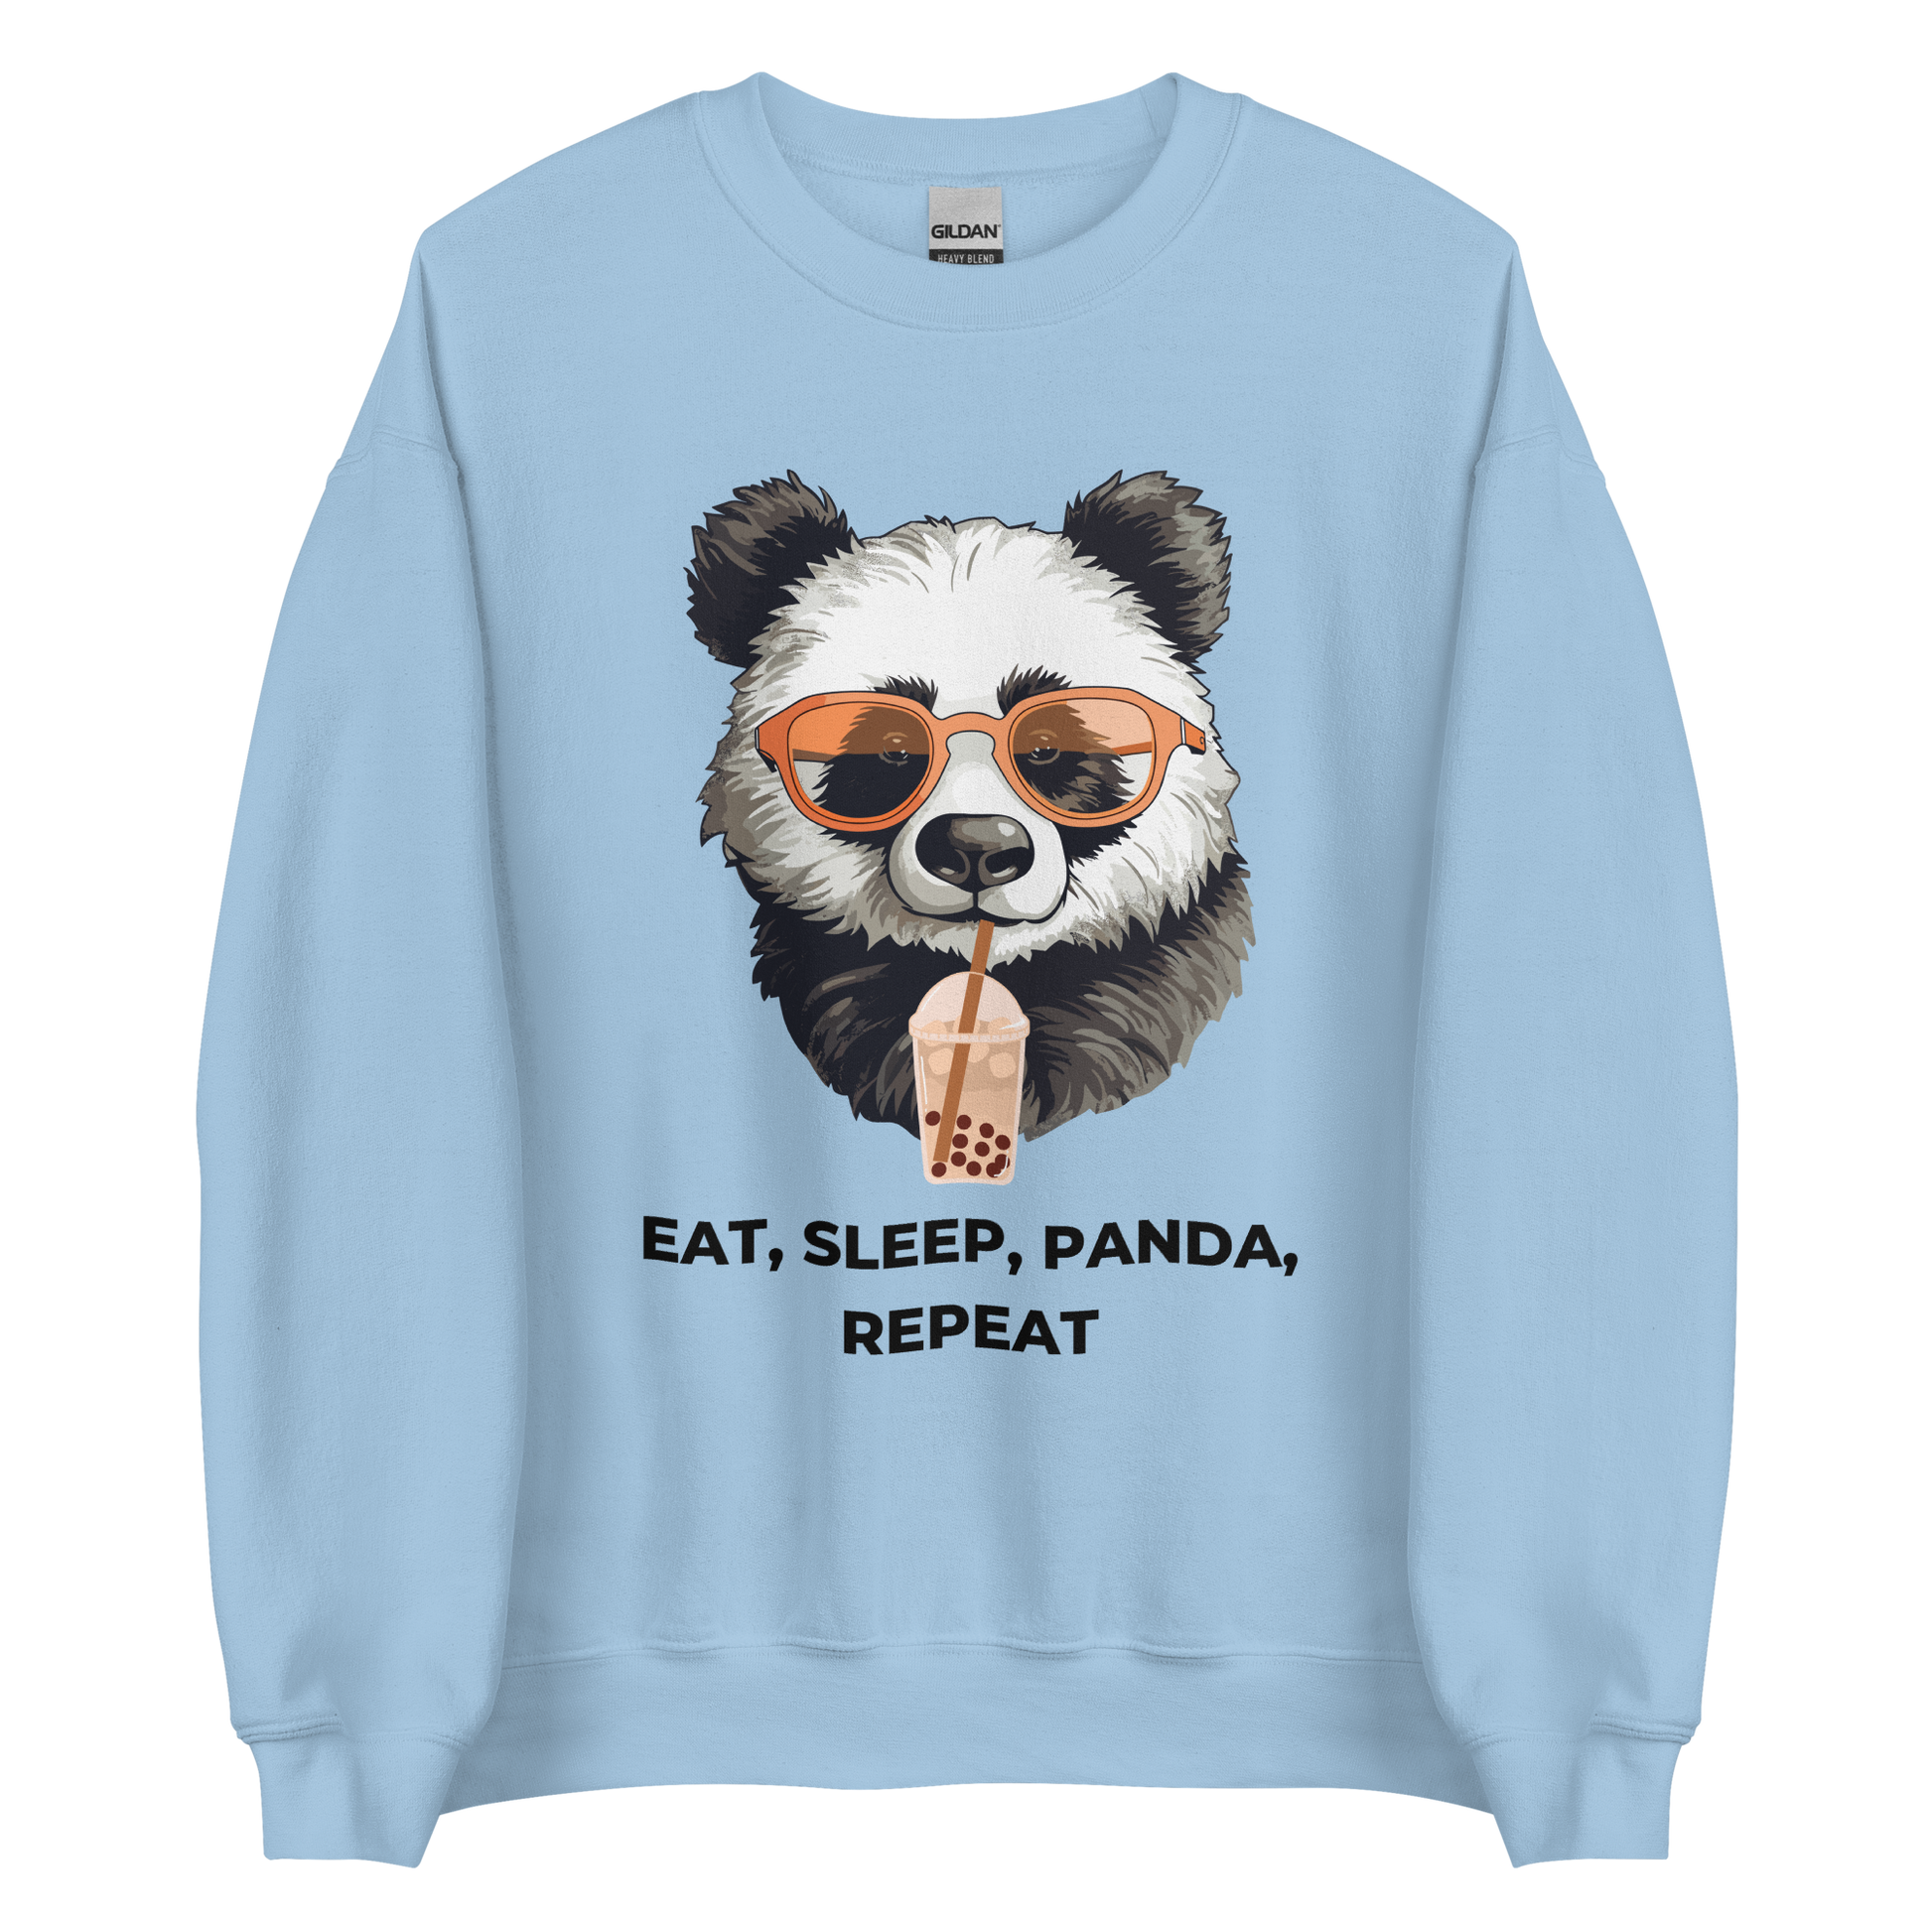 Light Blue Panda Sweatshirt featuring an adorable Eat, Sleep, Panda, Repeat graphic on the chest - Funny Graphic Panda Sweatshirts - Boozy Fox